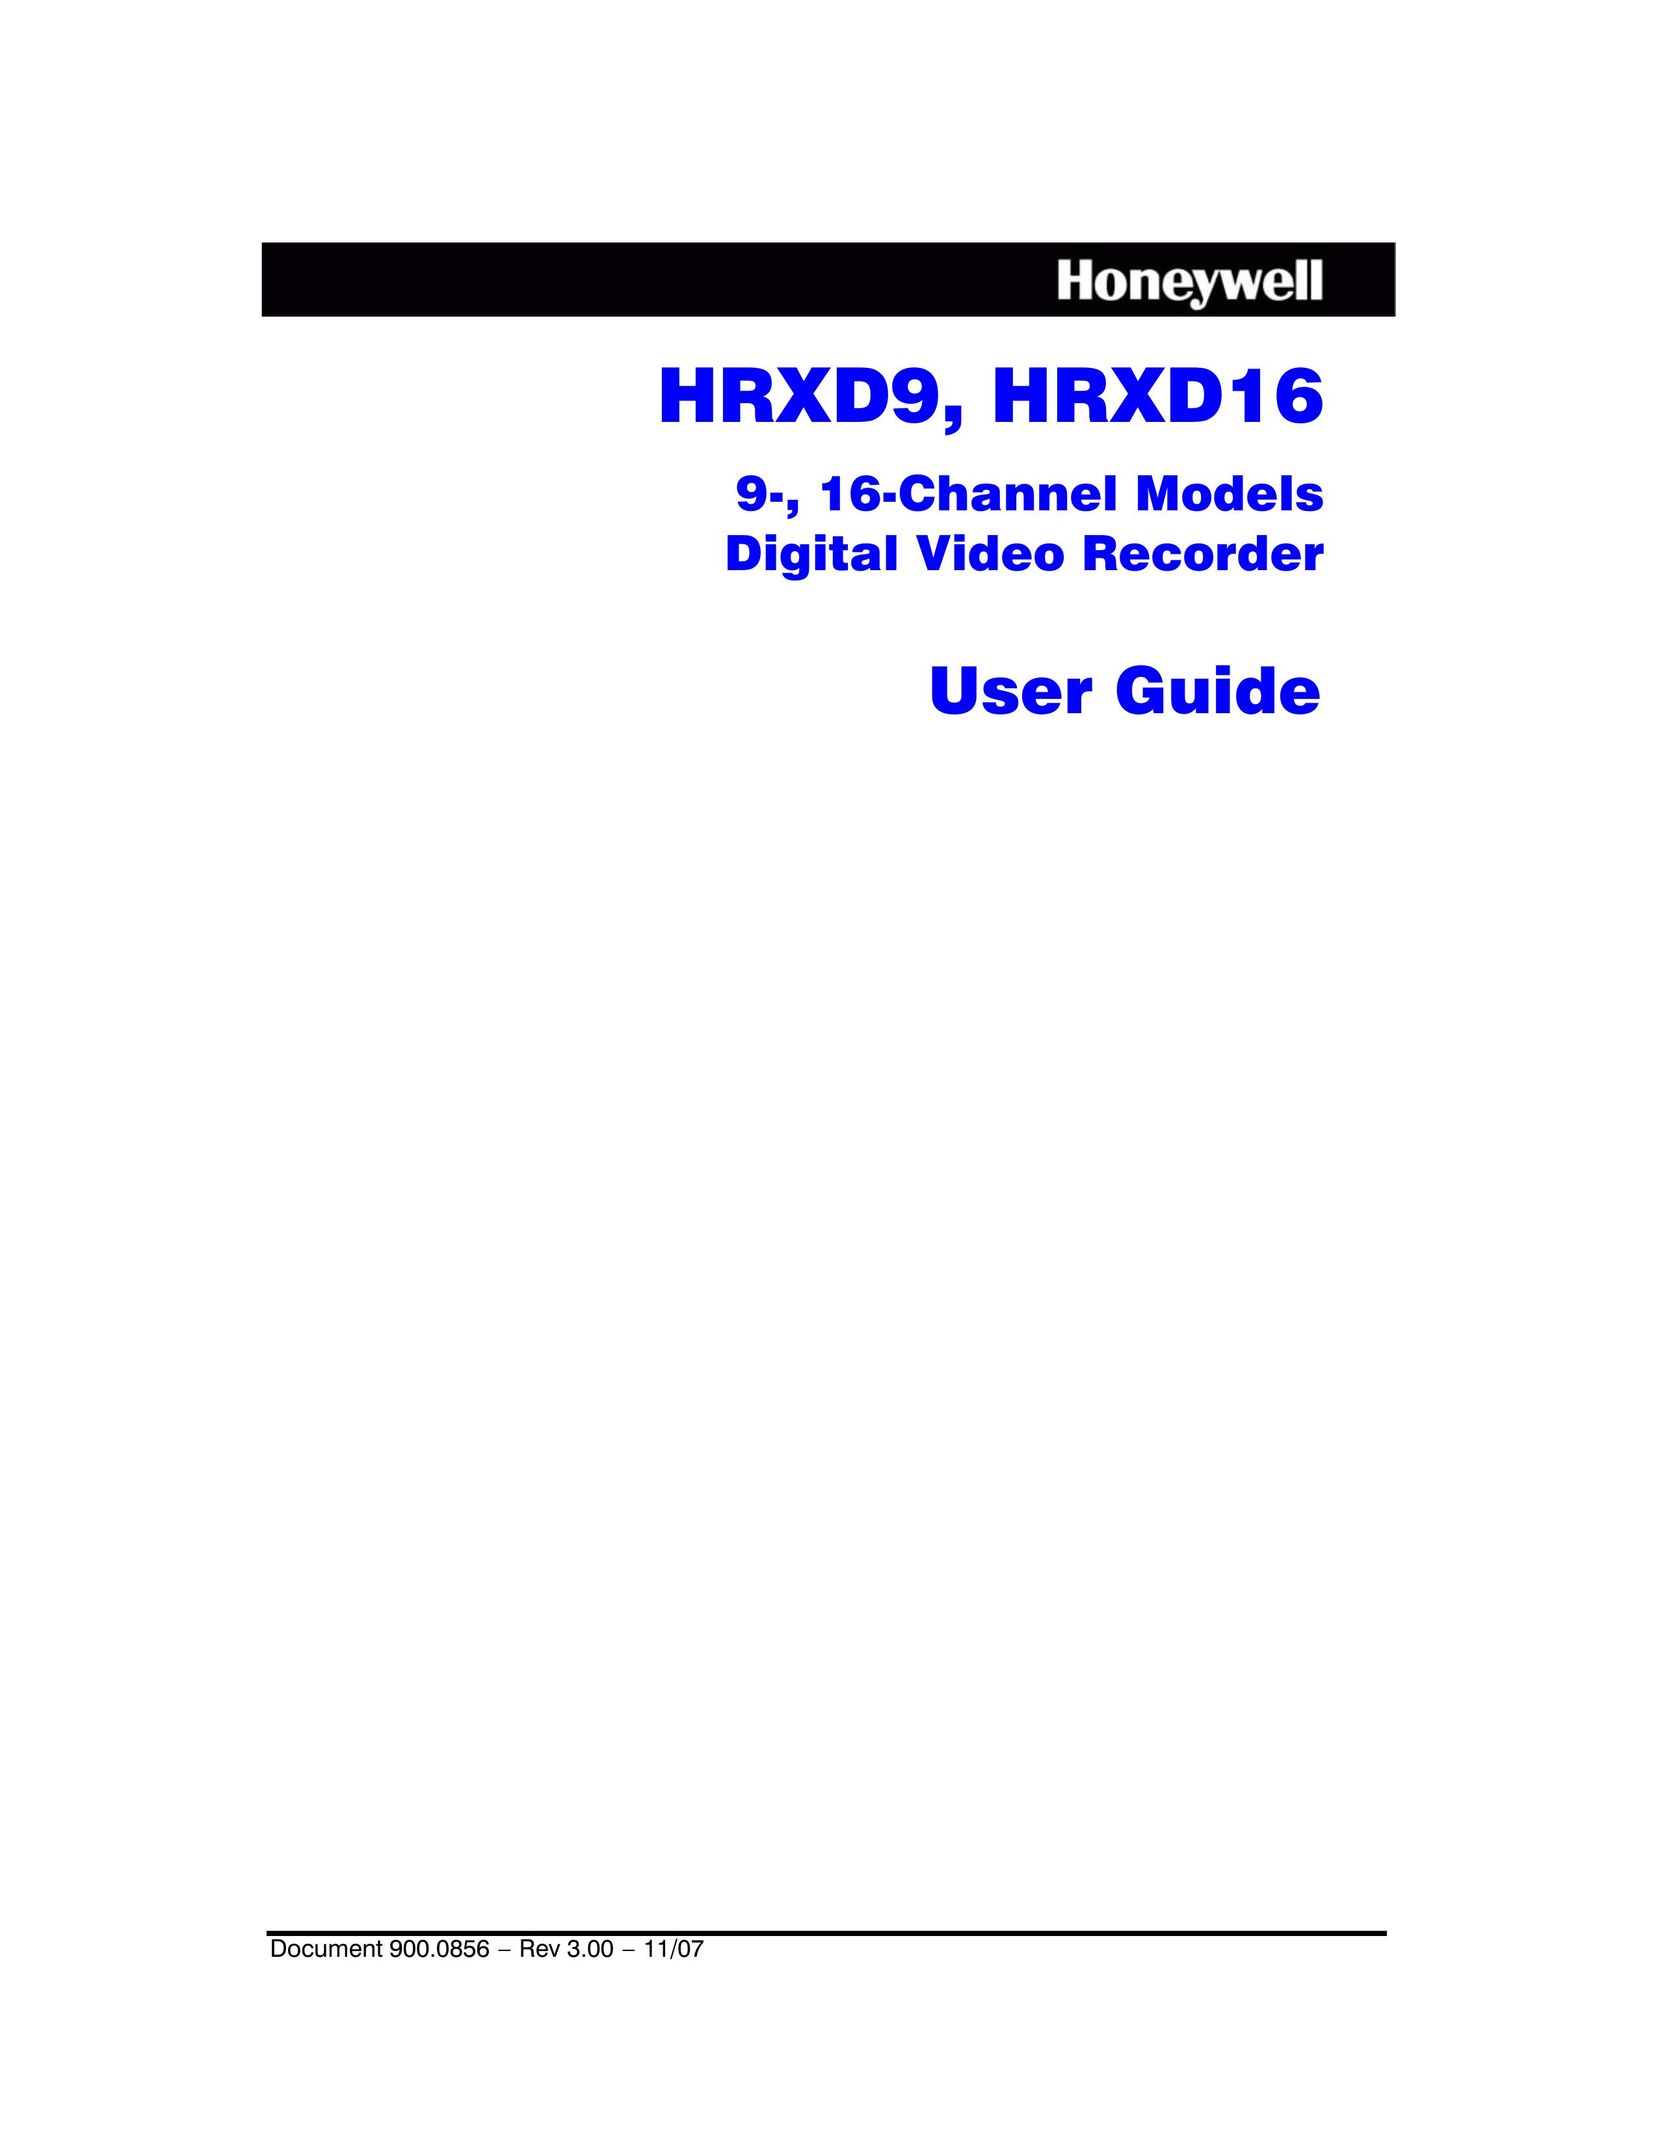 Honeywell HRXD9 DVR User Manual